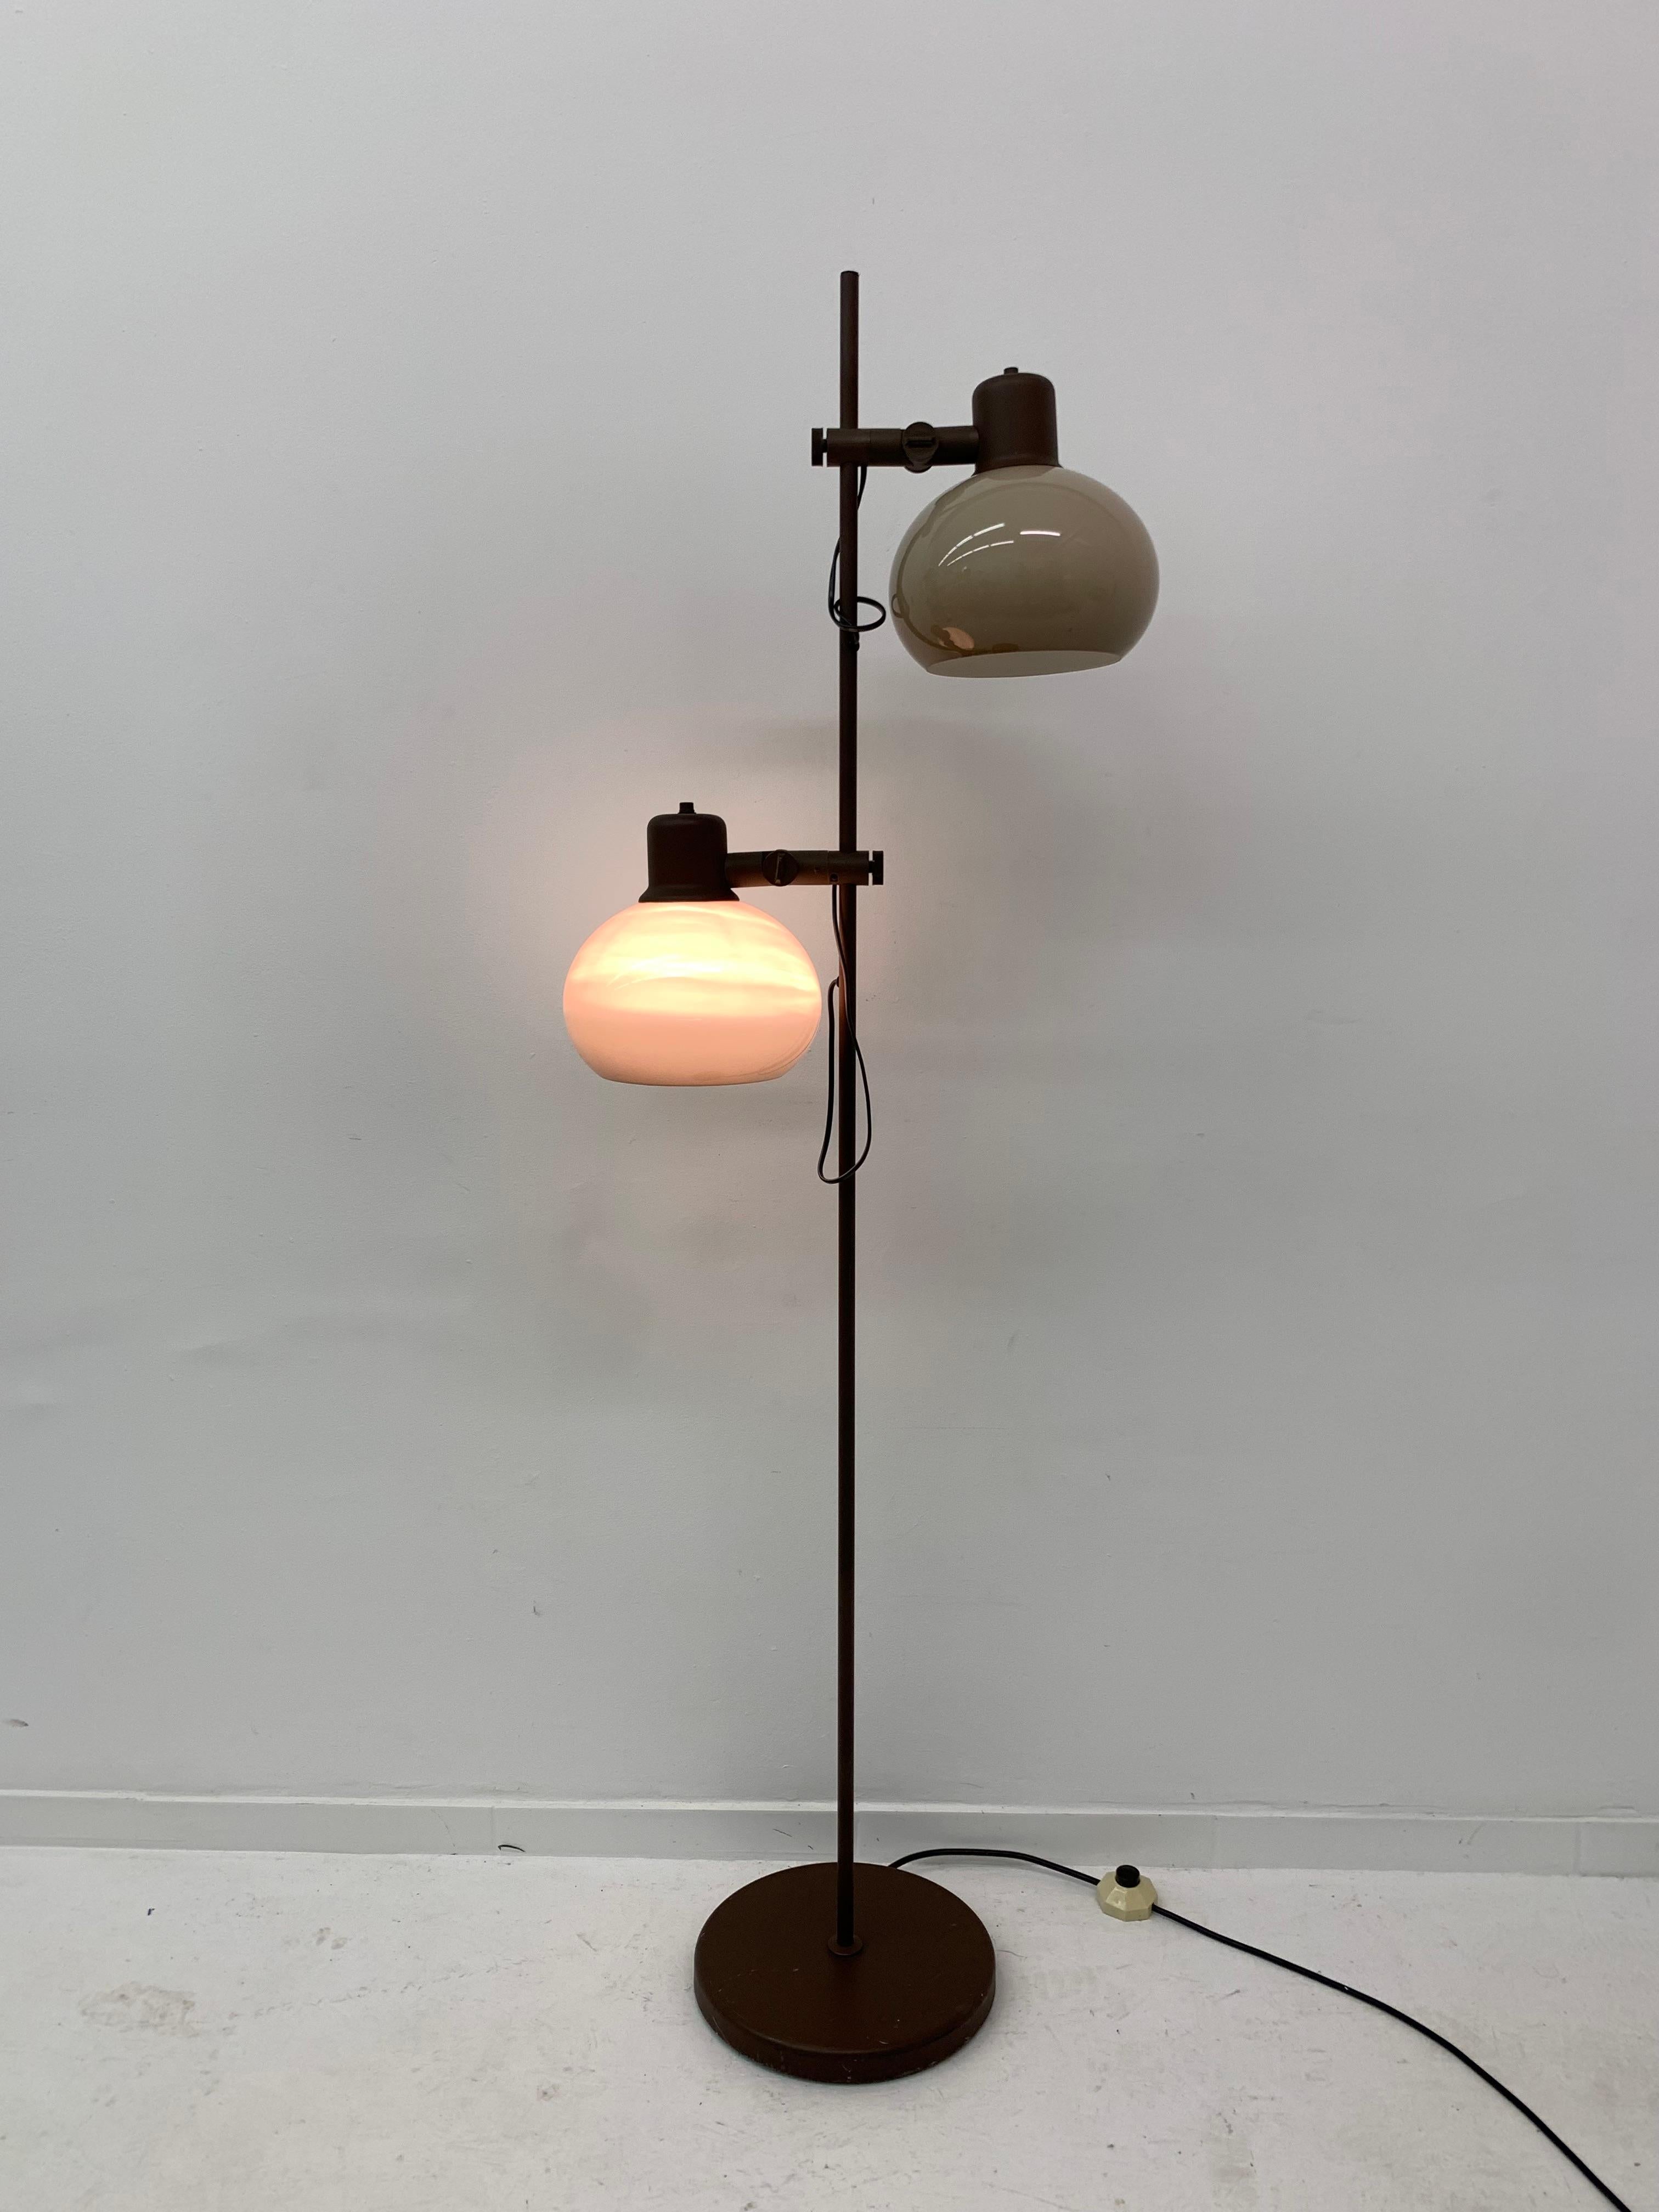 Dijkstra Mushroom Space Age Design Floor Lamp Dutch Design Retro Vintage, 1970s In Good Condition For Sale In Delft, NL